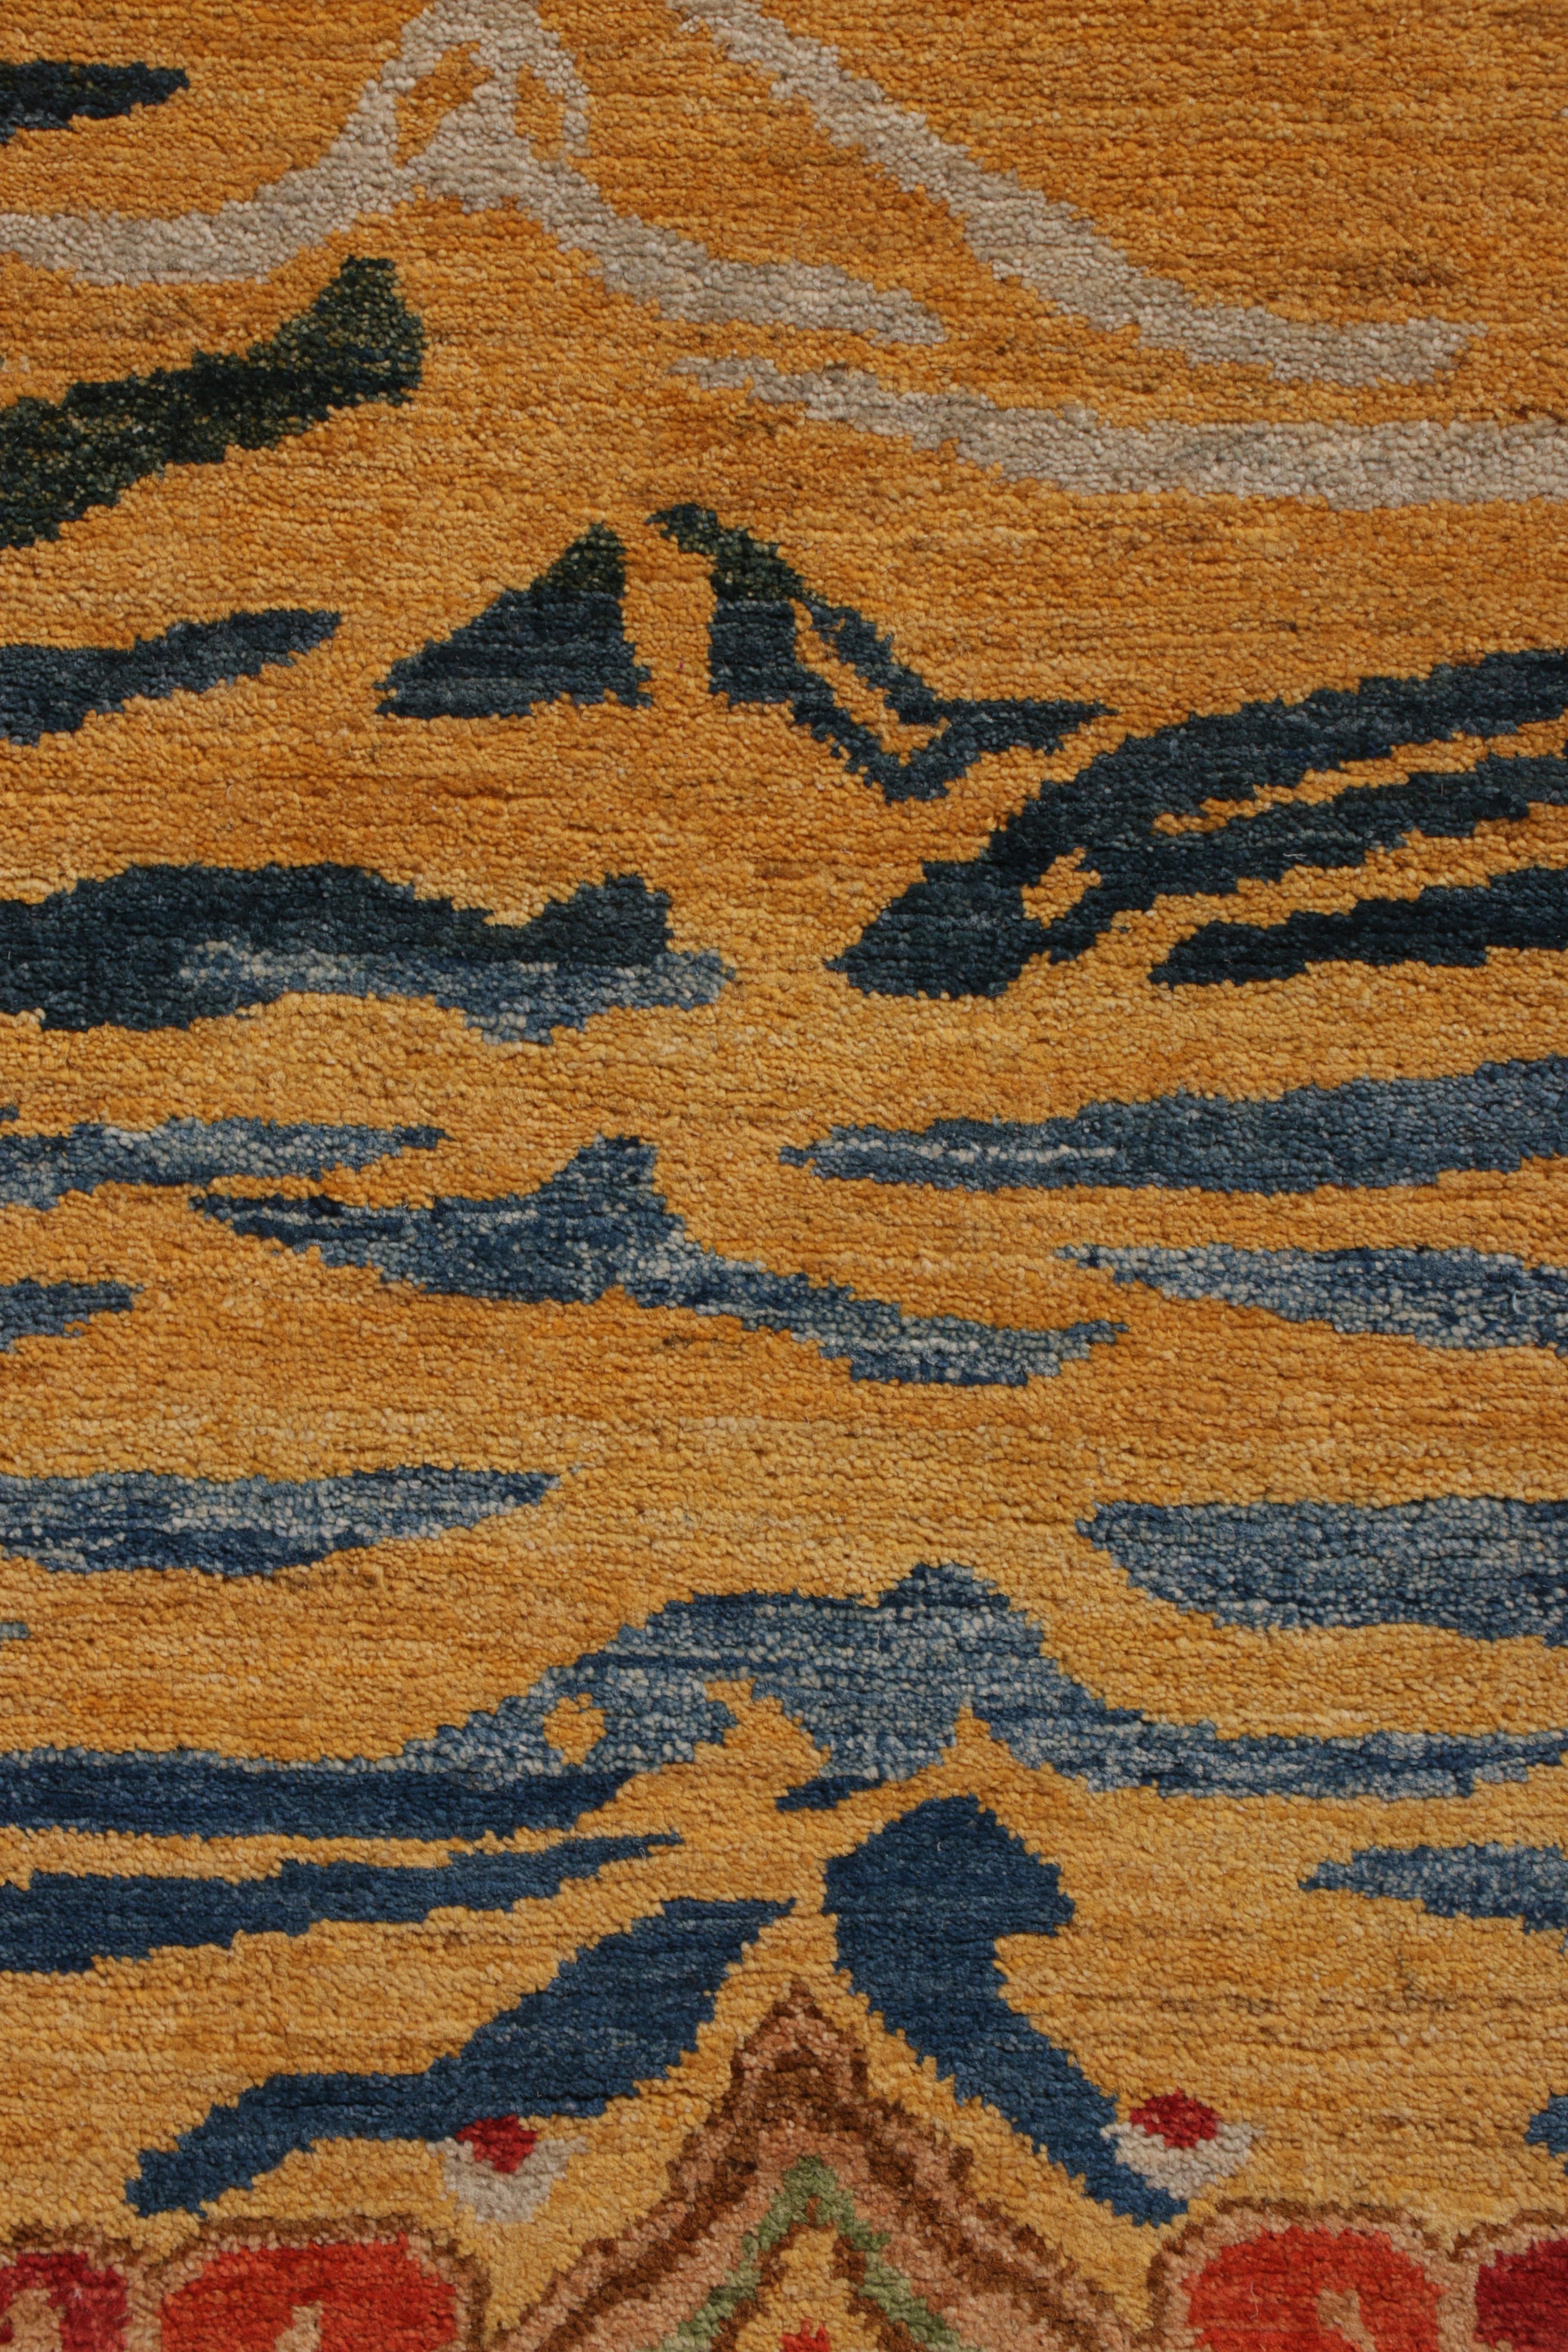 japanese tiger rug